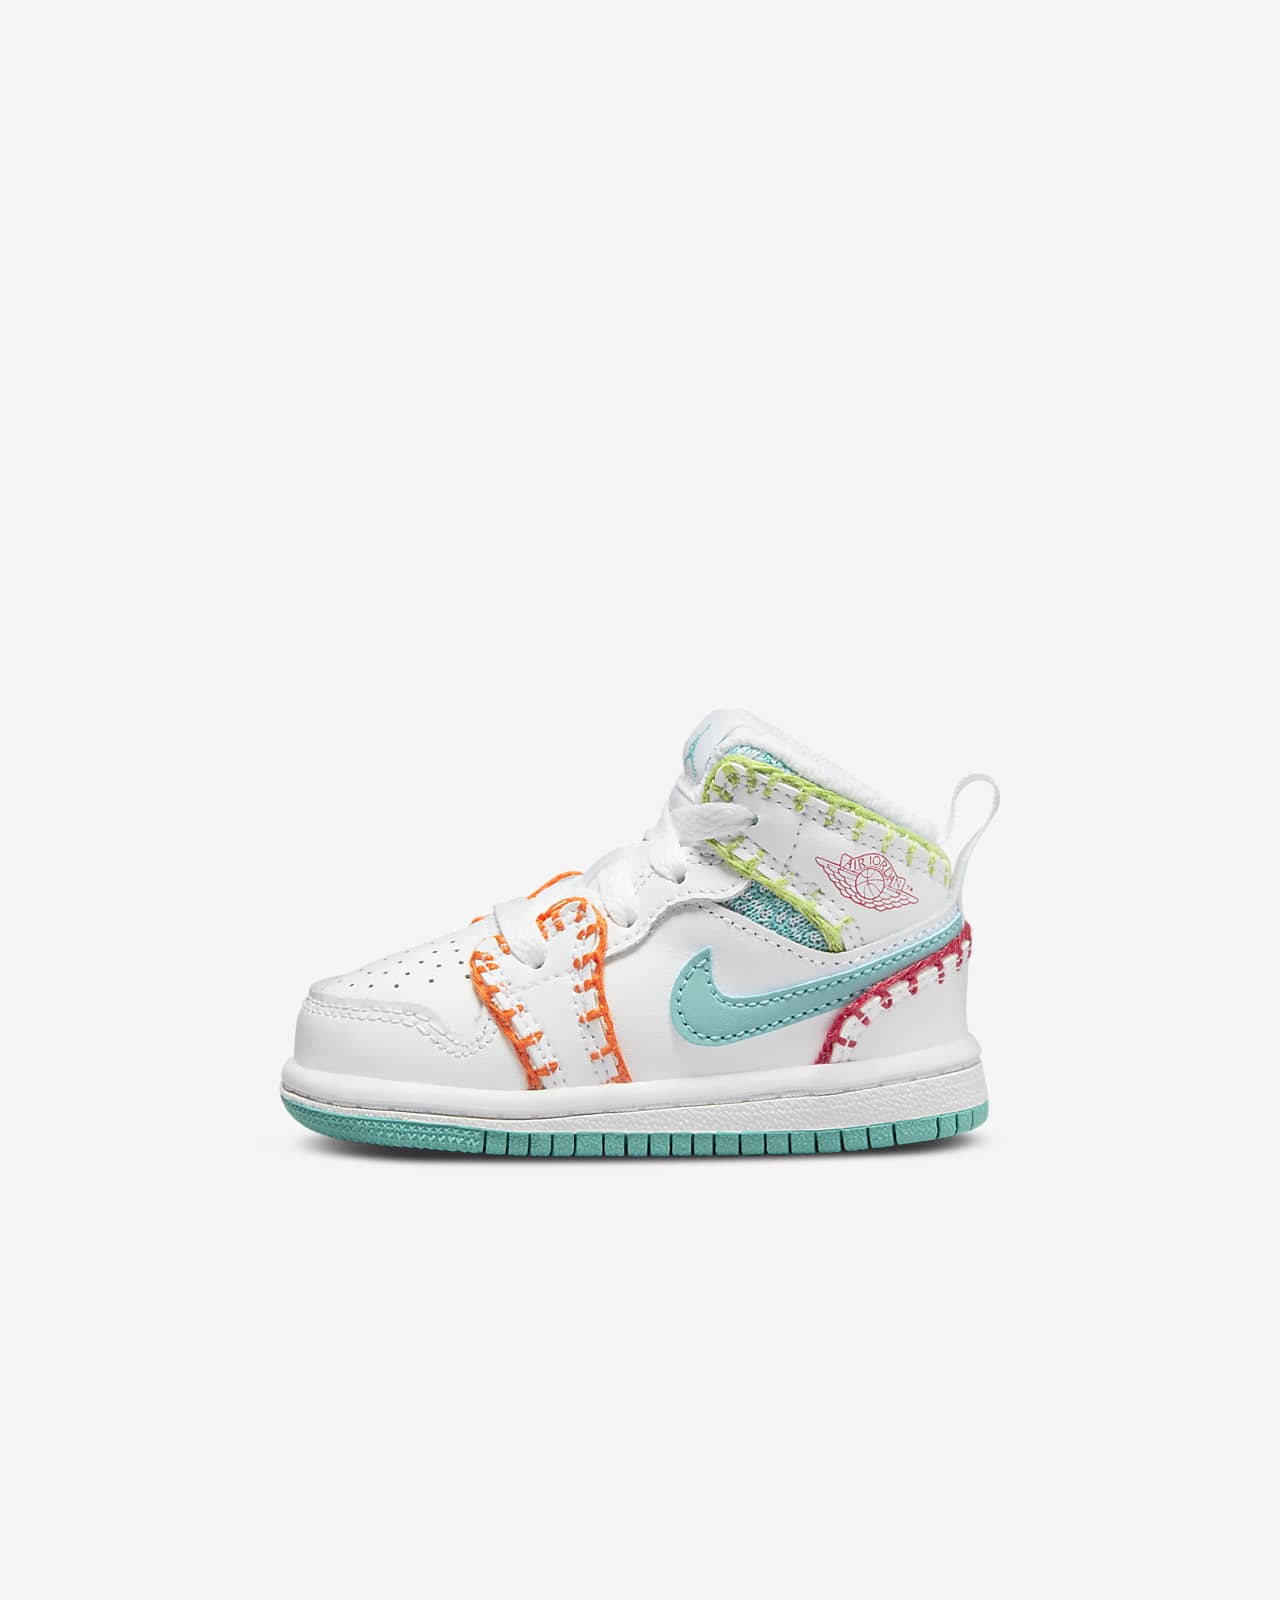 Prevención todo lo mejor Canberra Jordan 1 Mid SE Baby/Toddler Shoes. Nike.com